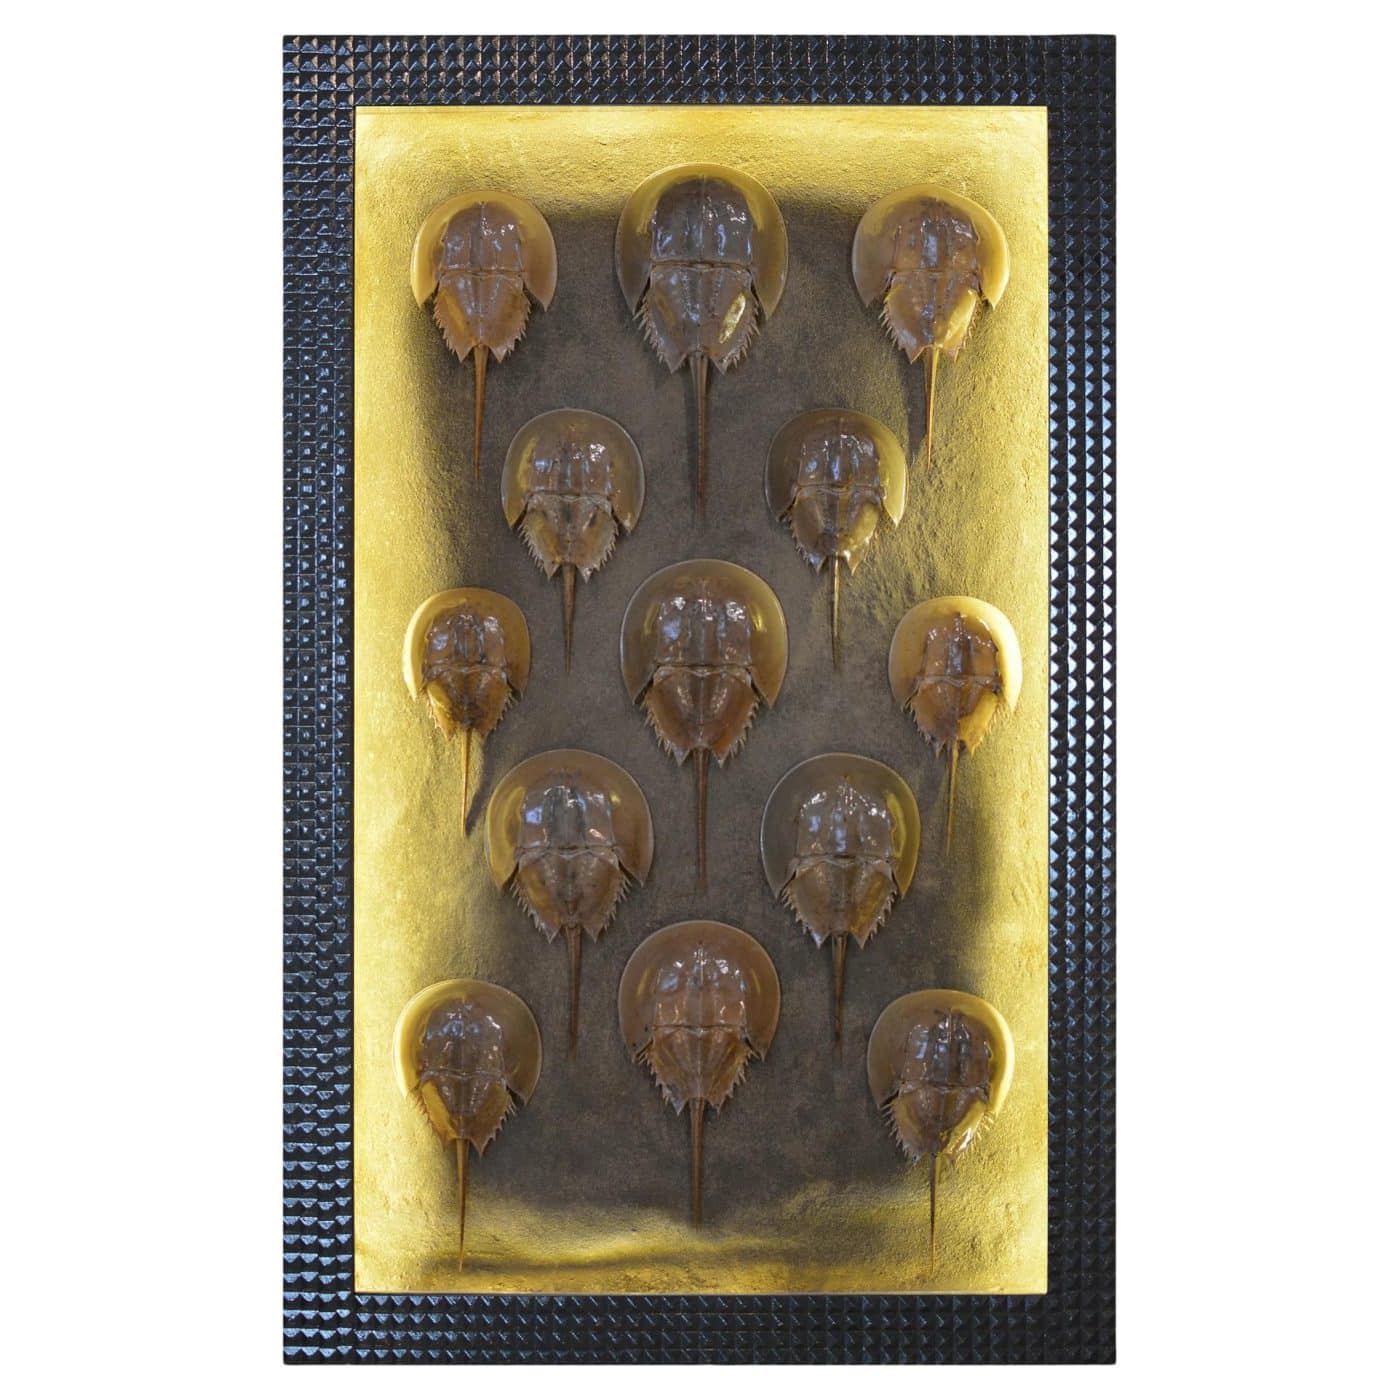 A Tennant New York Shadow Box displaying 13 horseshoe crab shells